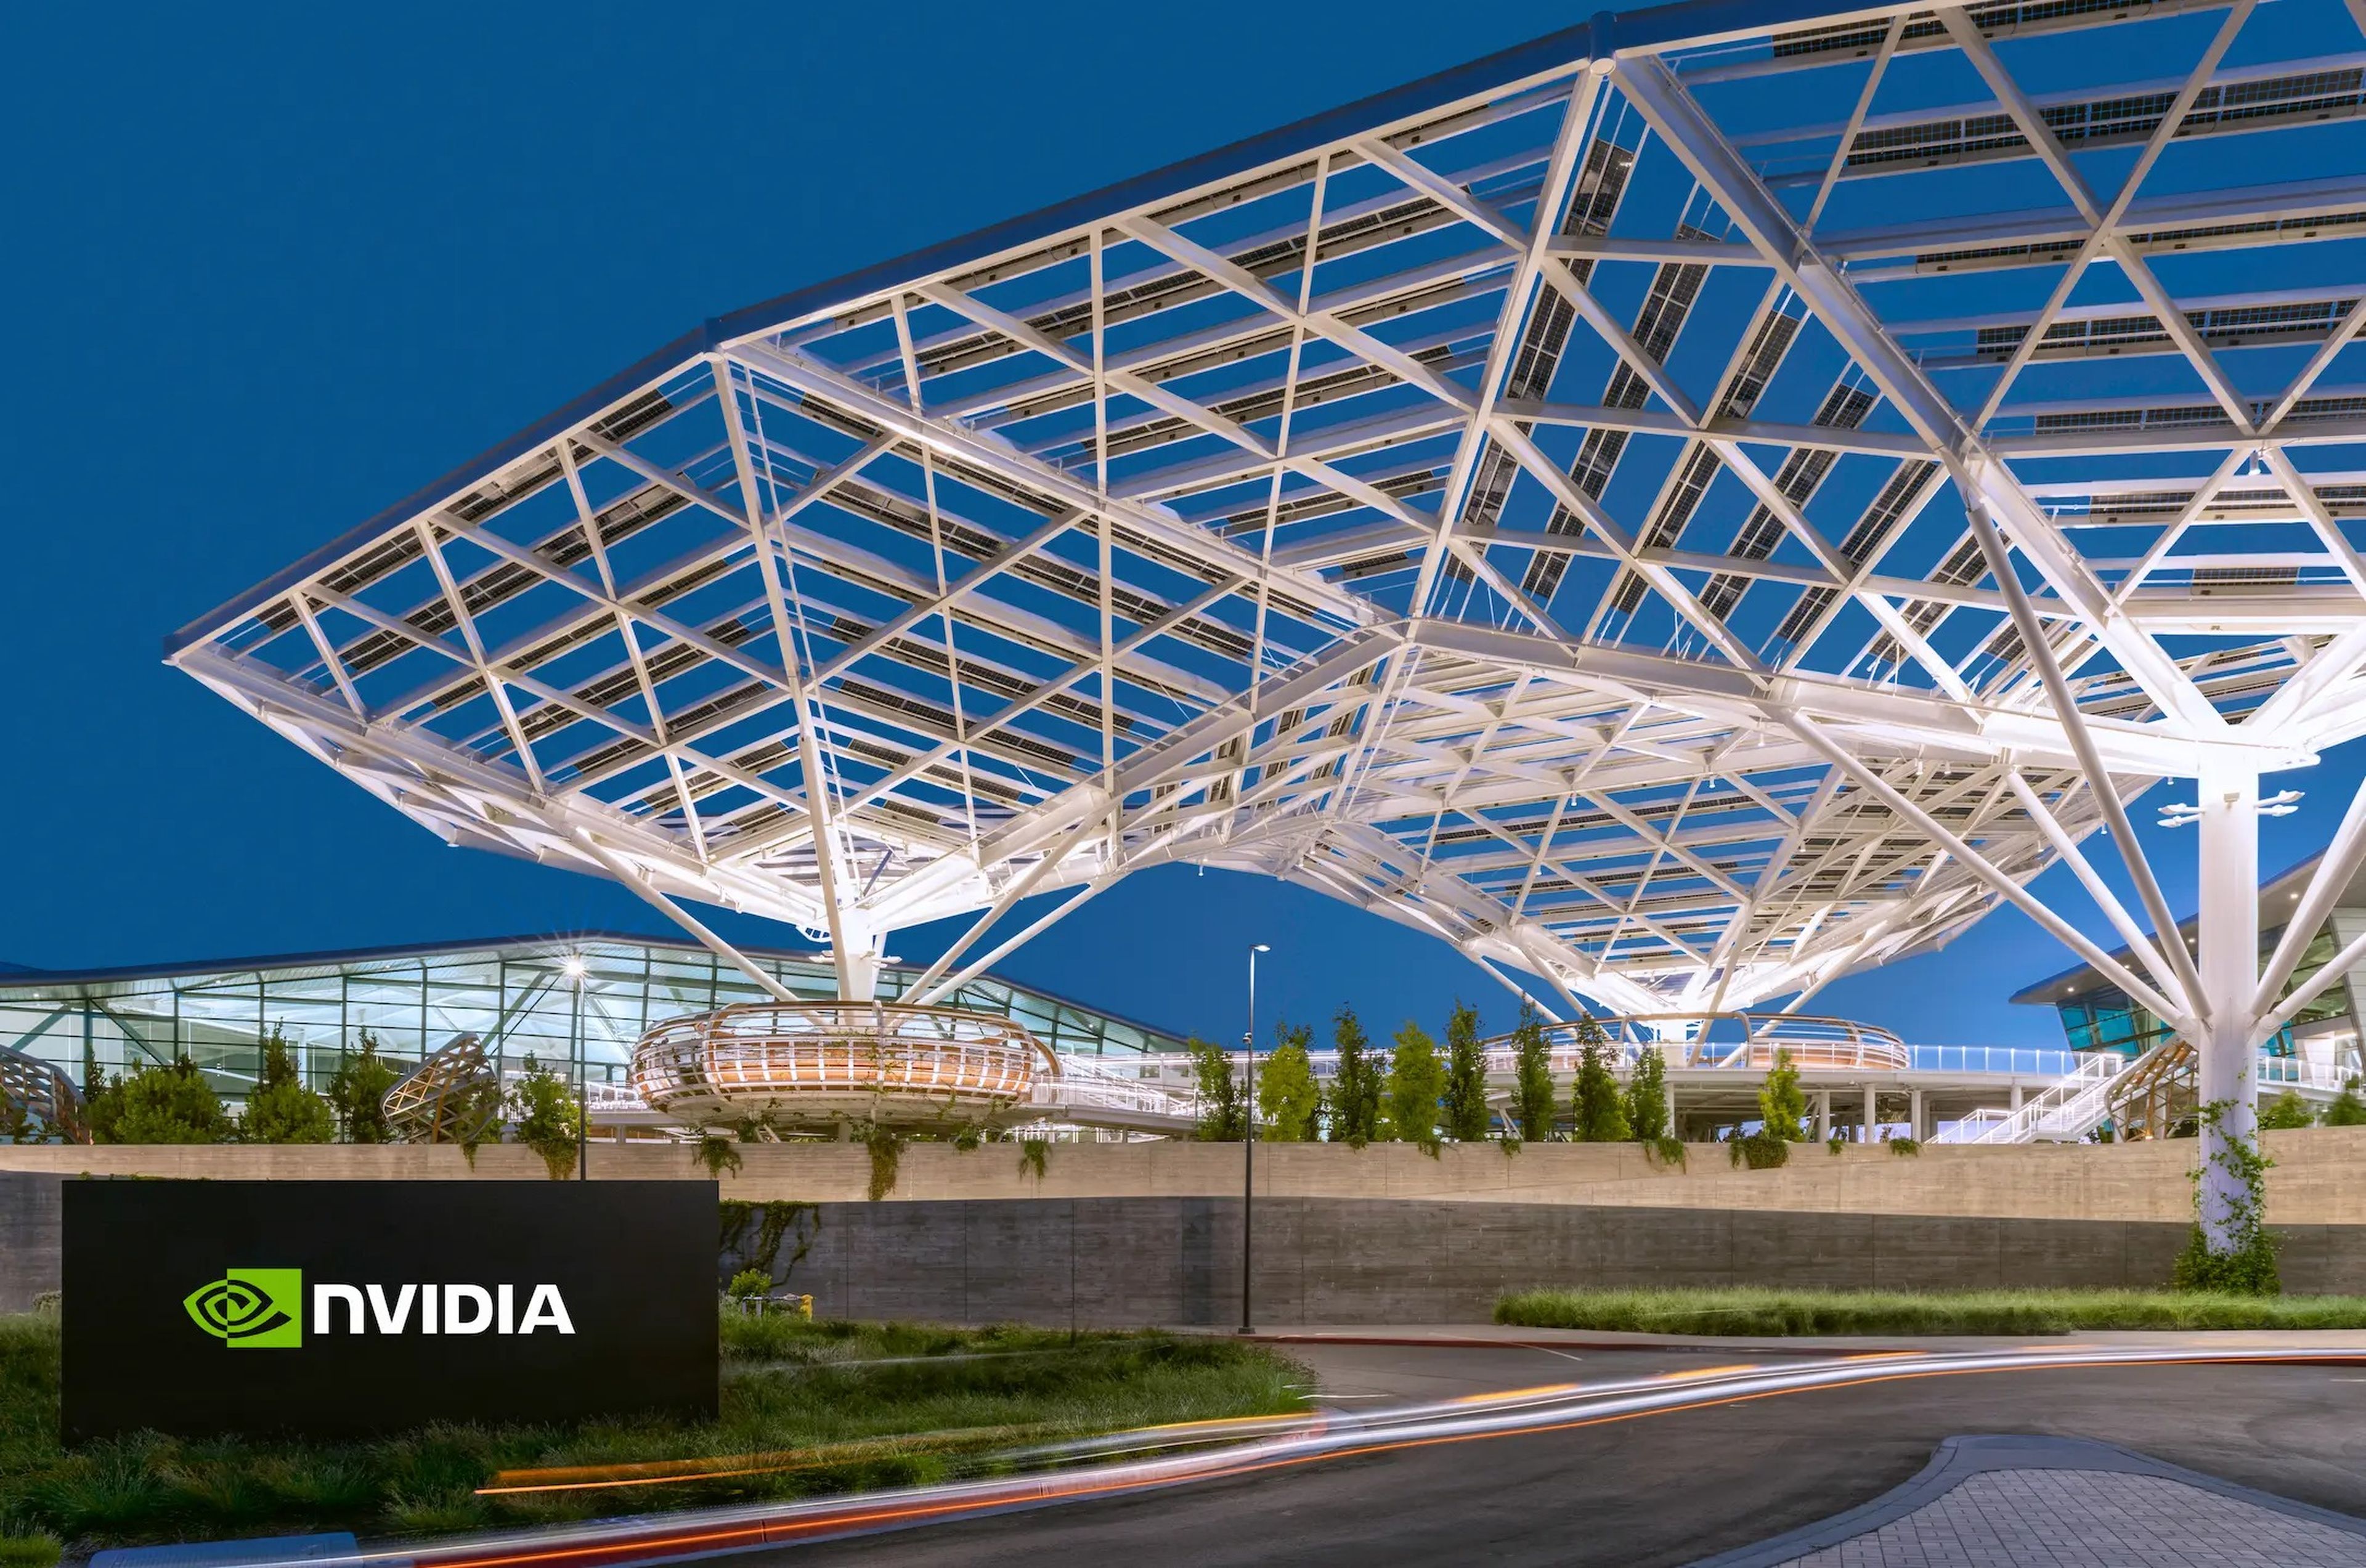 The exterior of Nvidia's HQ in Santa Clara